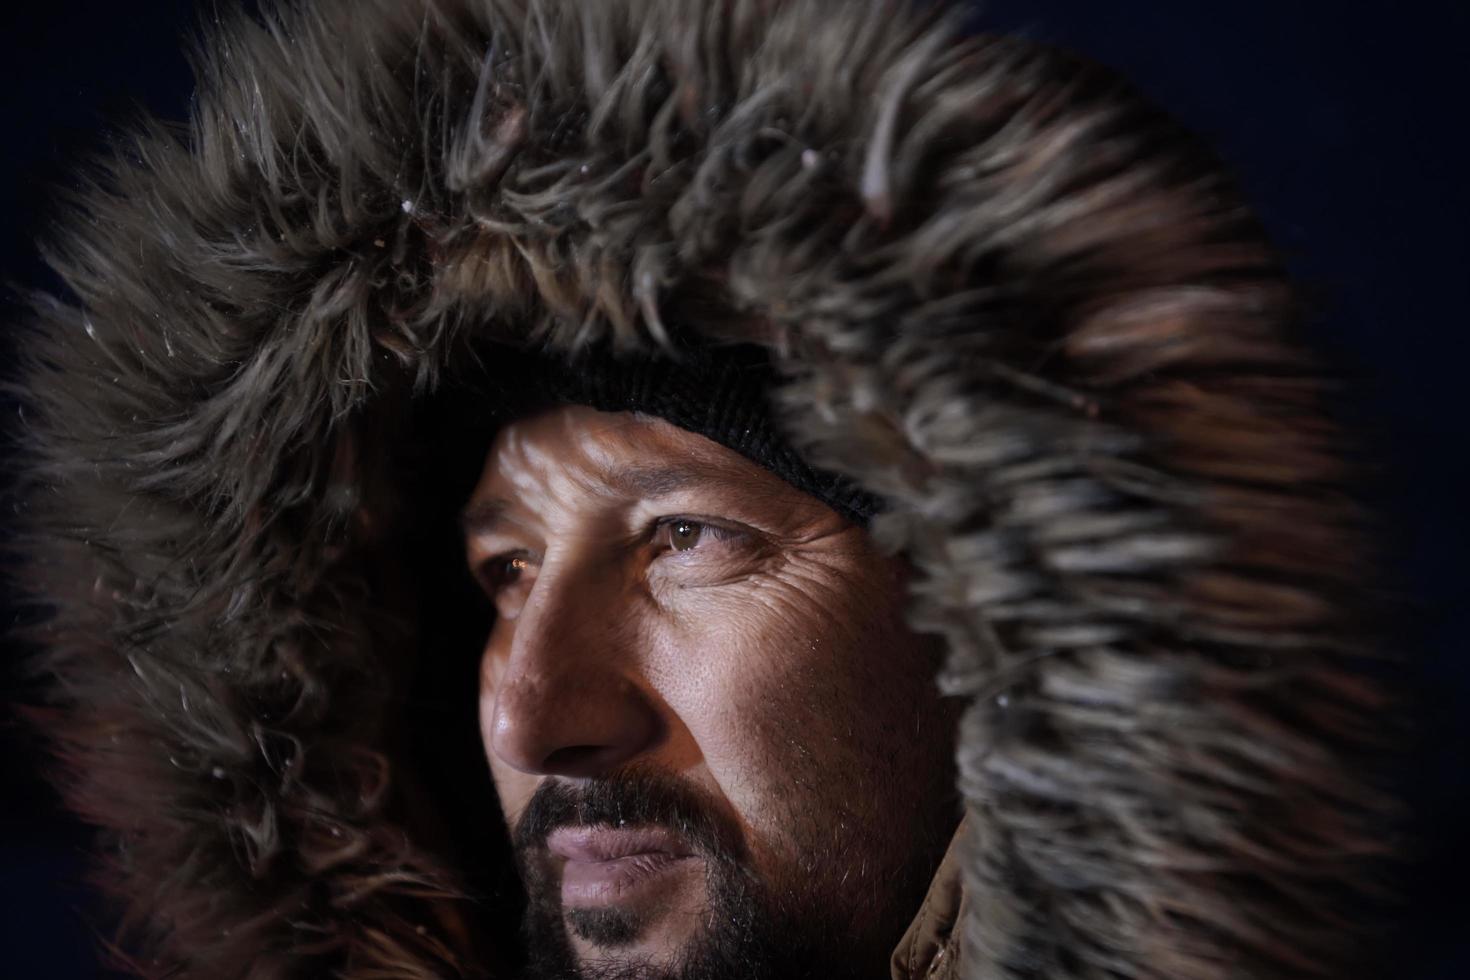 man at winter in stormy weather night  wearing warm  fur jacket photo